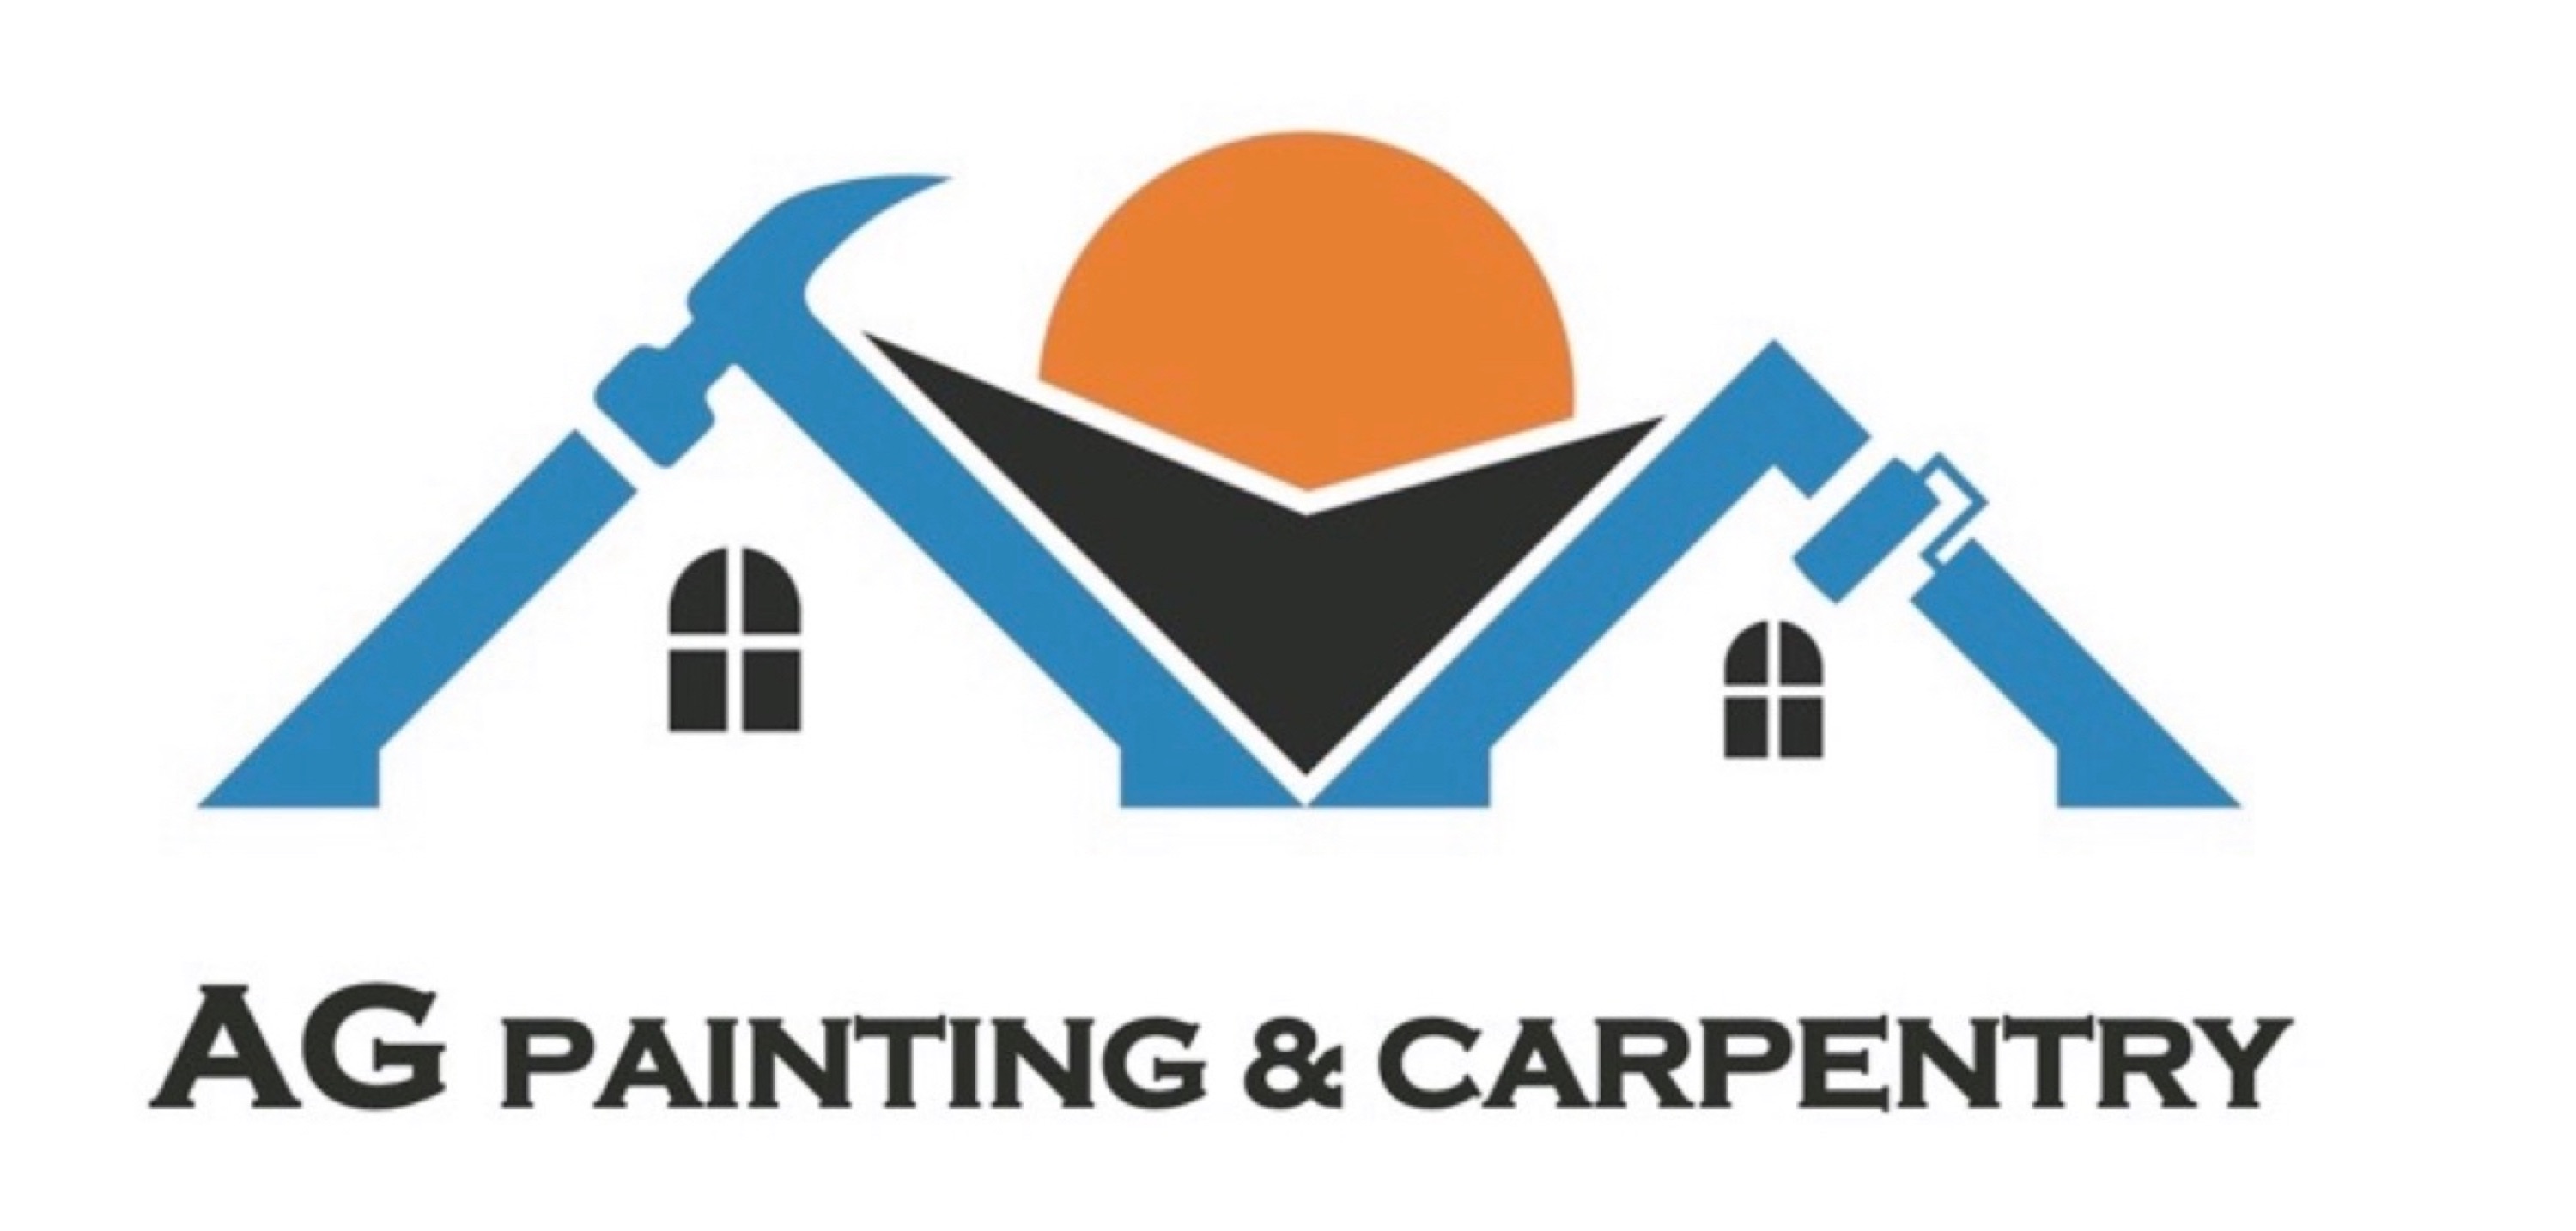 AG Painting & Carpentry Logo